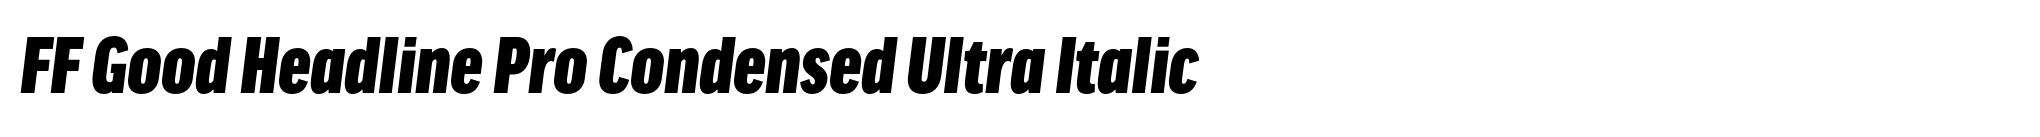 FF Good Headline Pro Condensed Ultra Italic image